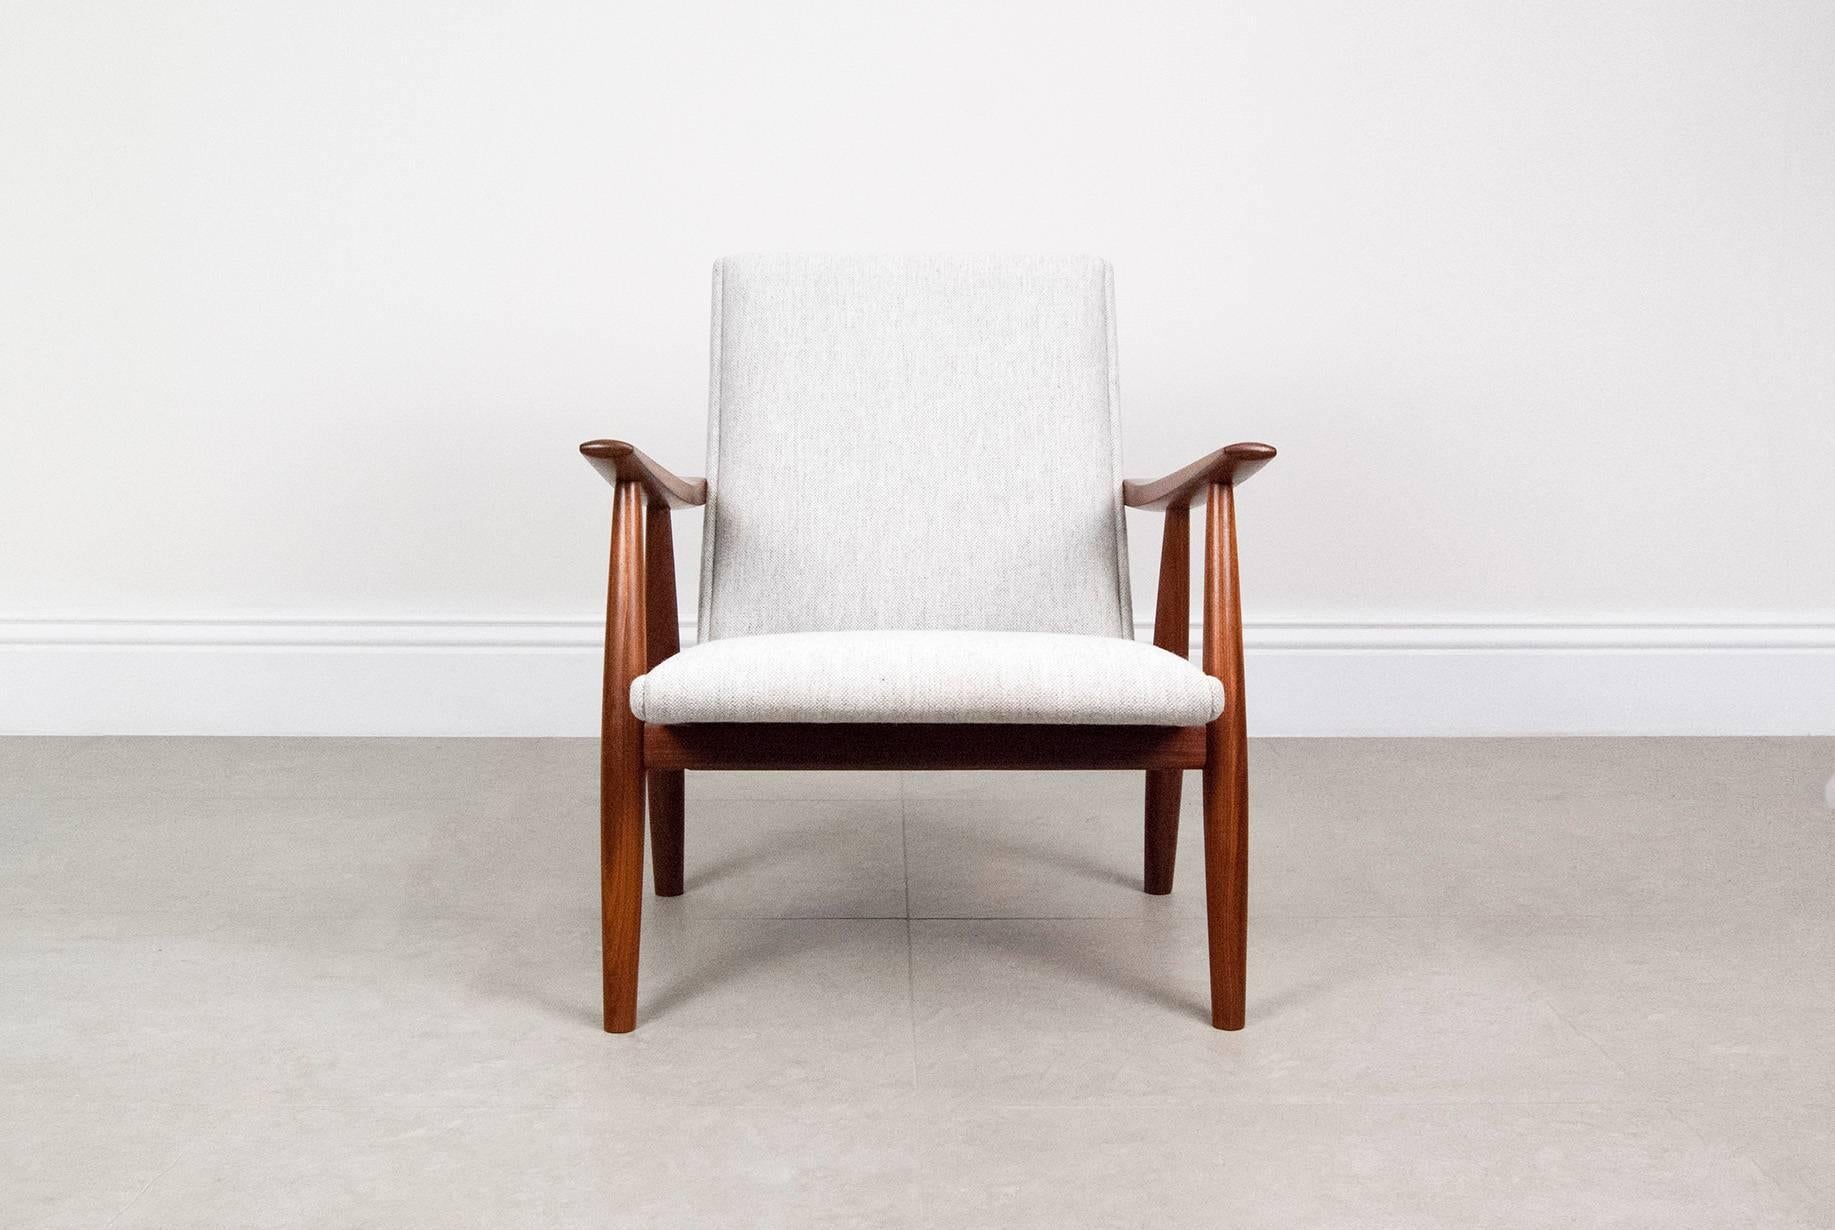 Hans J. Wegner GE-260 chair, 1958. Produced by GETAMA, Denmark. Solid Afromosia teak frame, sprung seat reupholstered in Kvadrat Hallingdal fabric. Polished brass fittings.